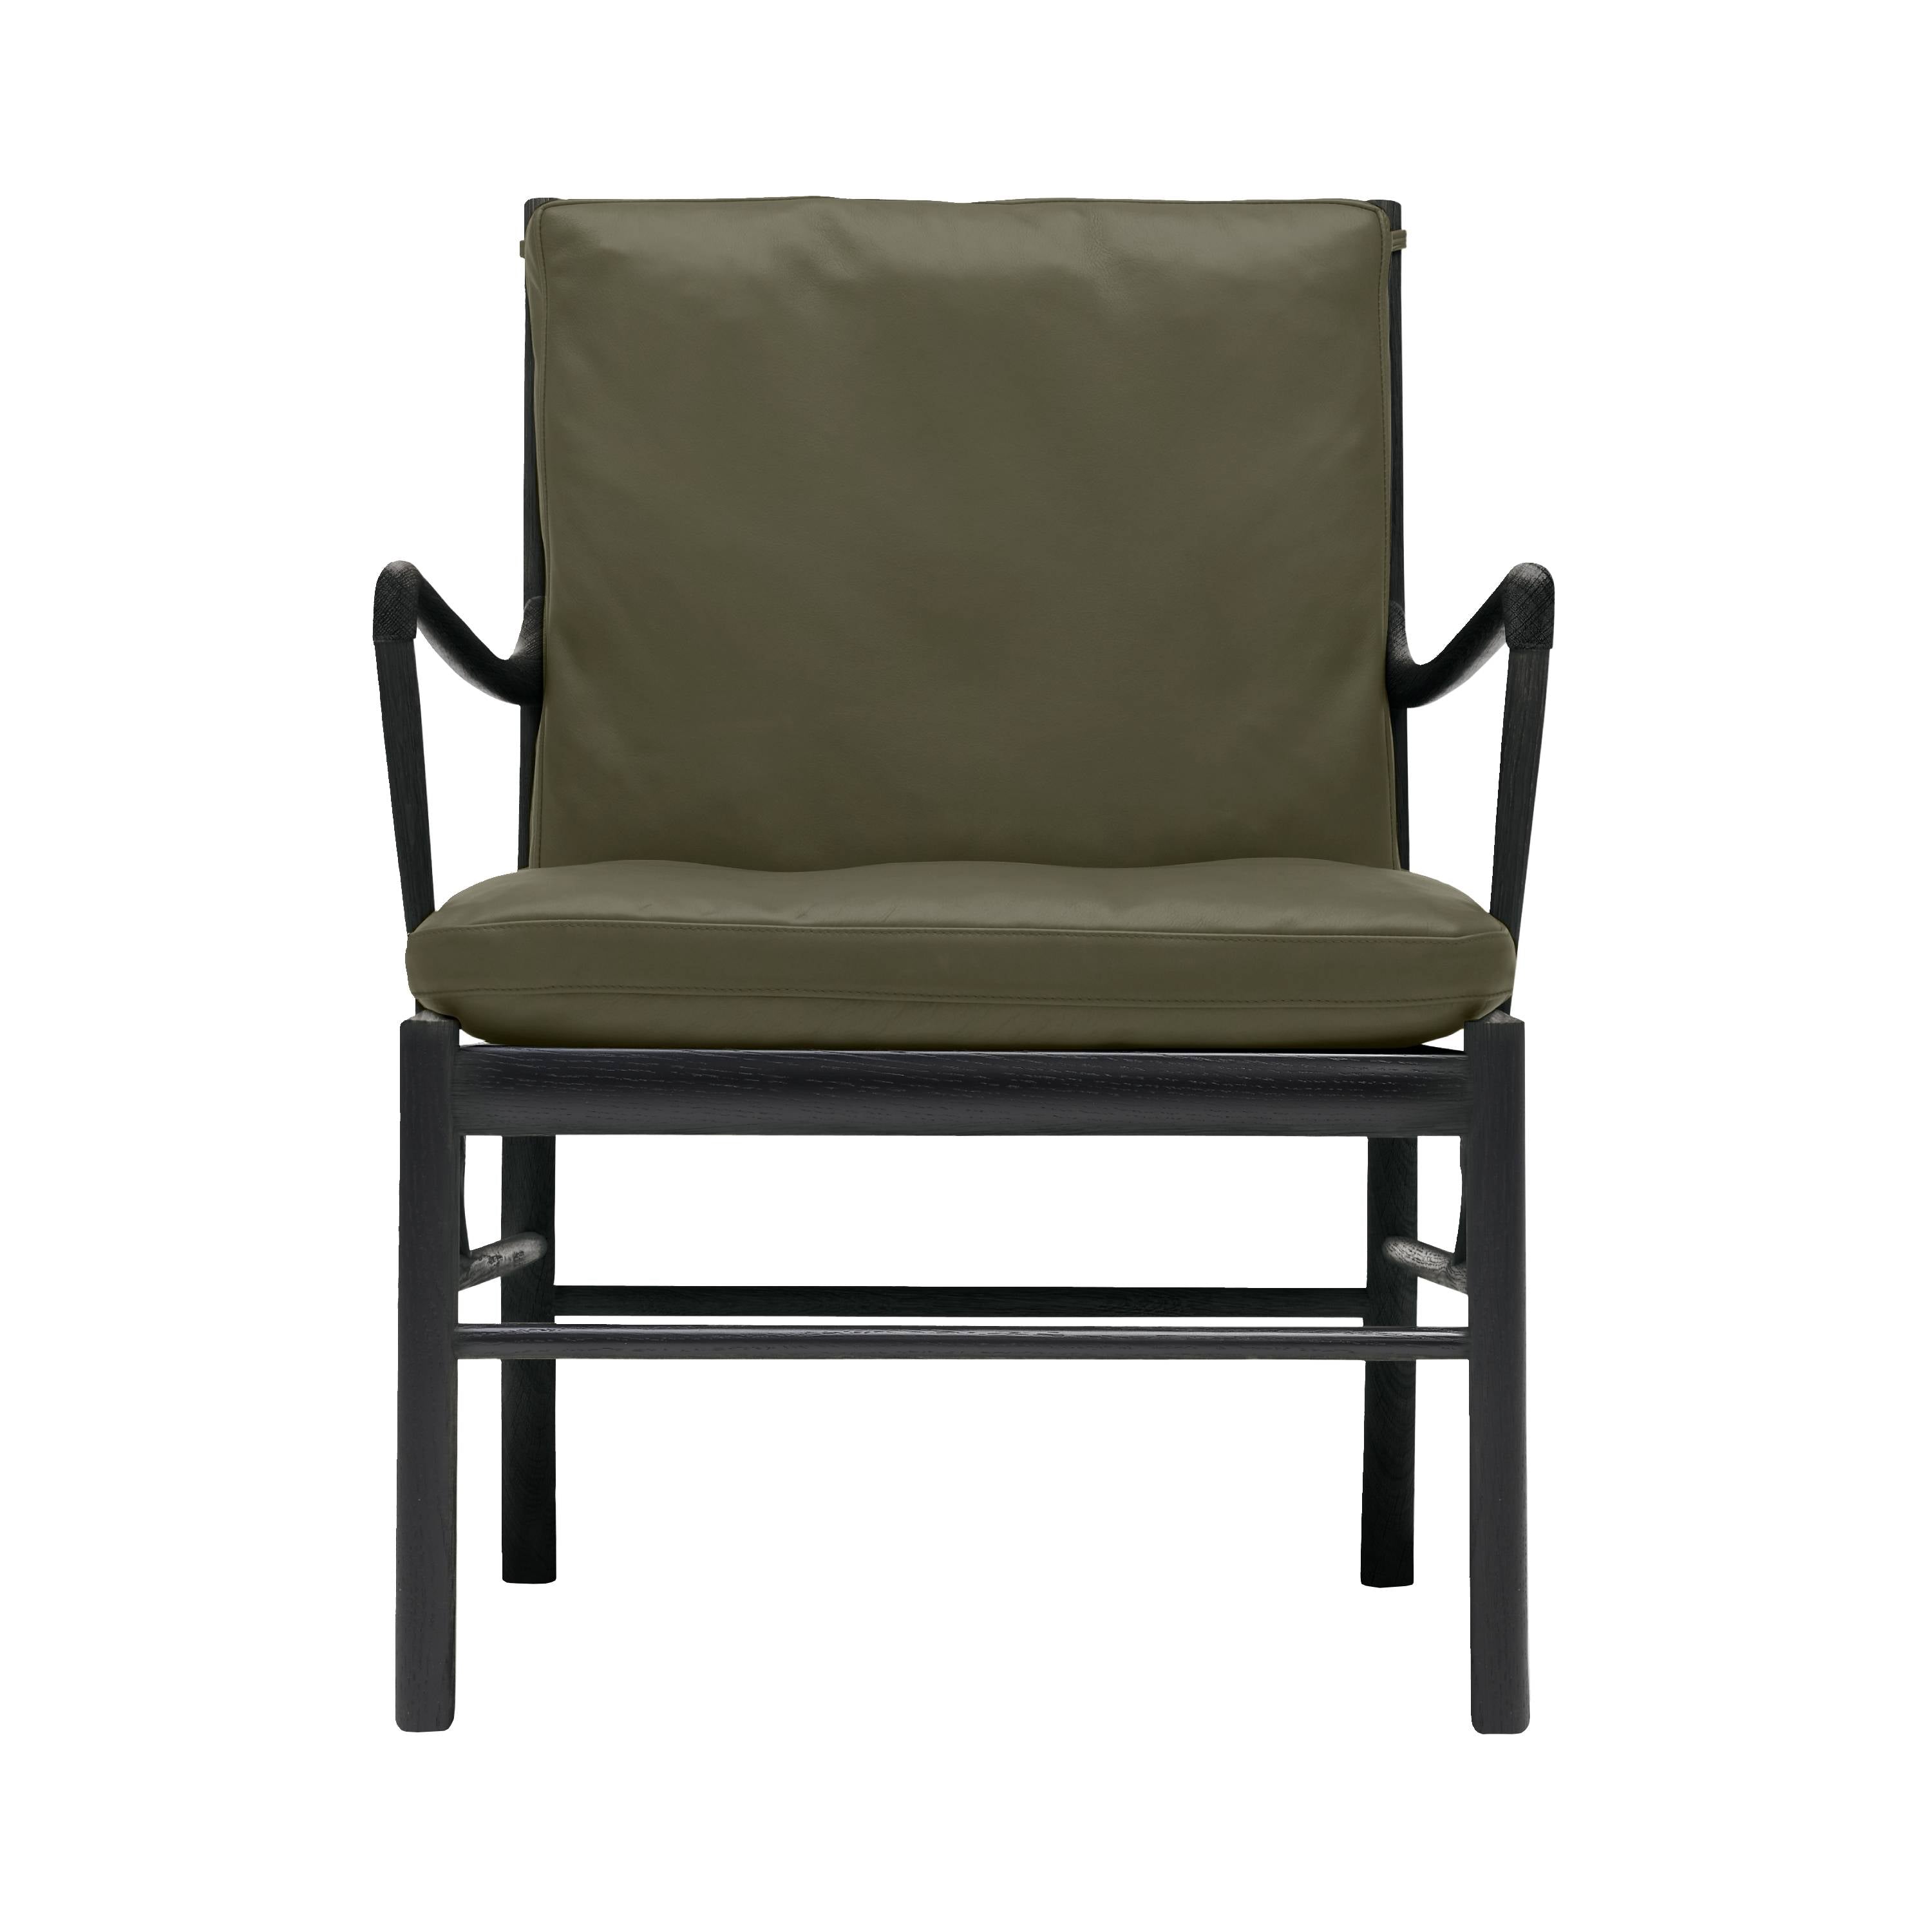 OW149 Colonial Chair: Black Oak